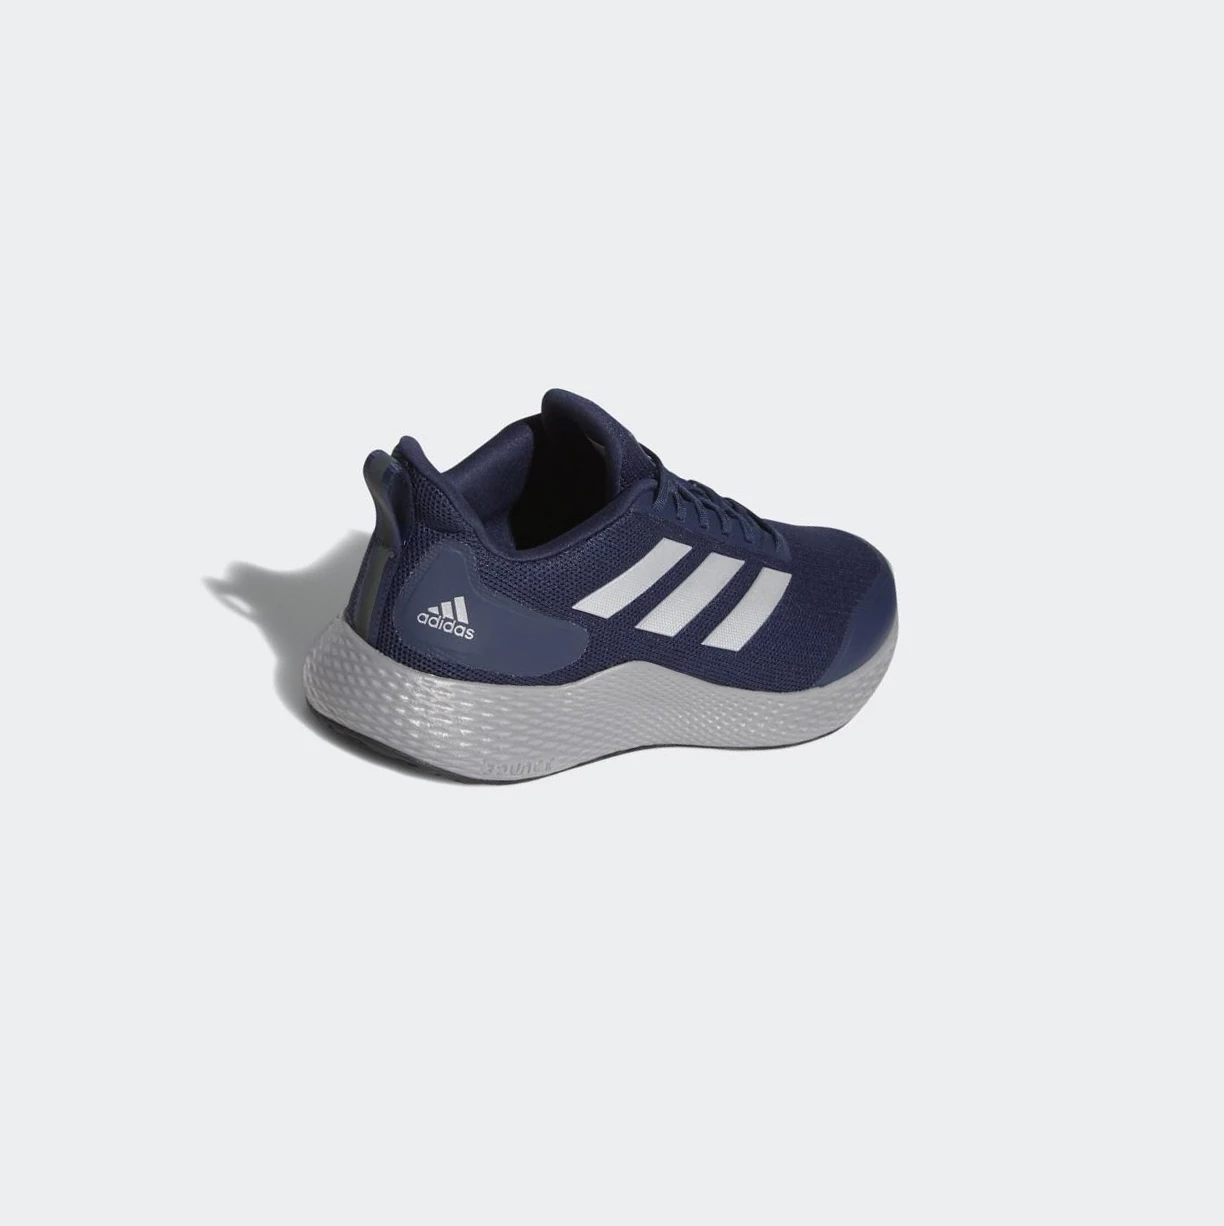 Bezecke Topanky Adidas Edge Gameday Panske Modre | 068SKNYCWFT